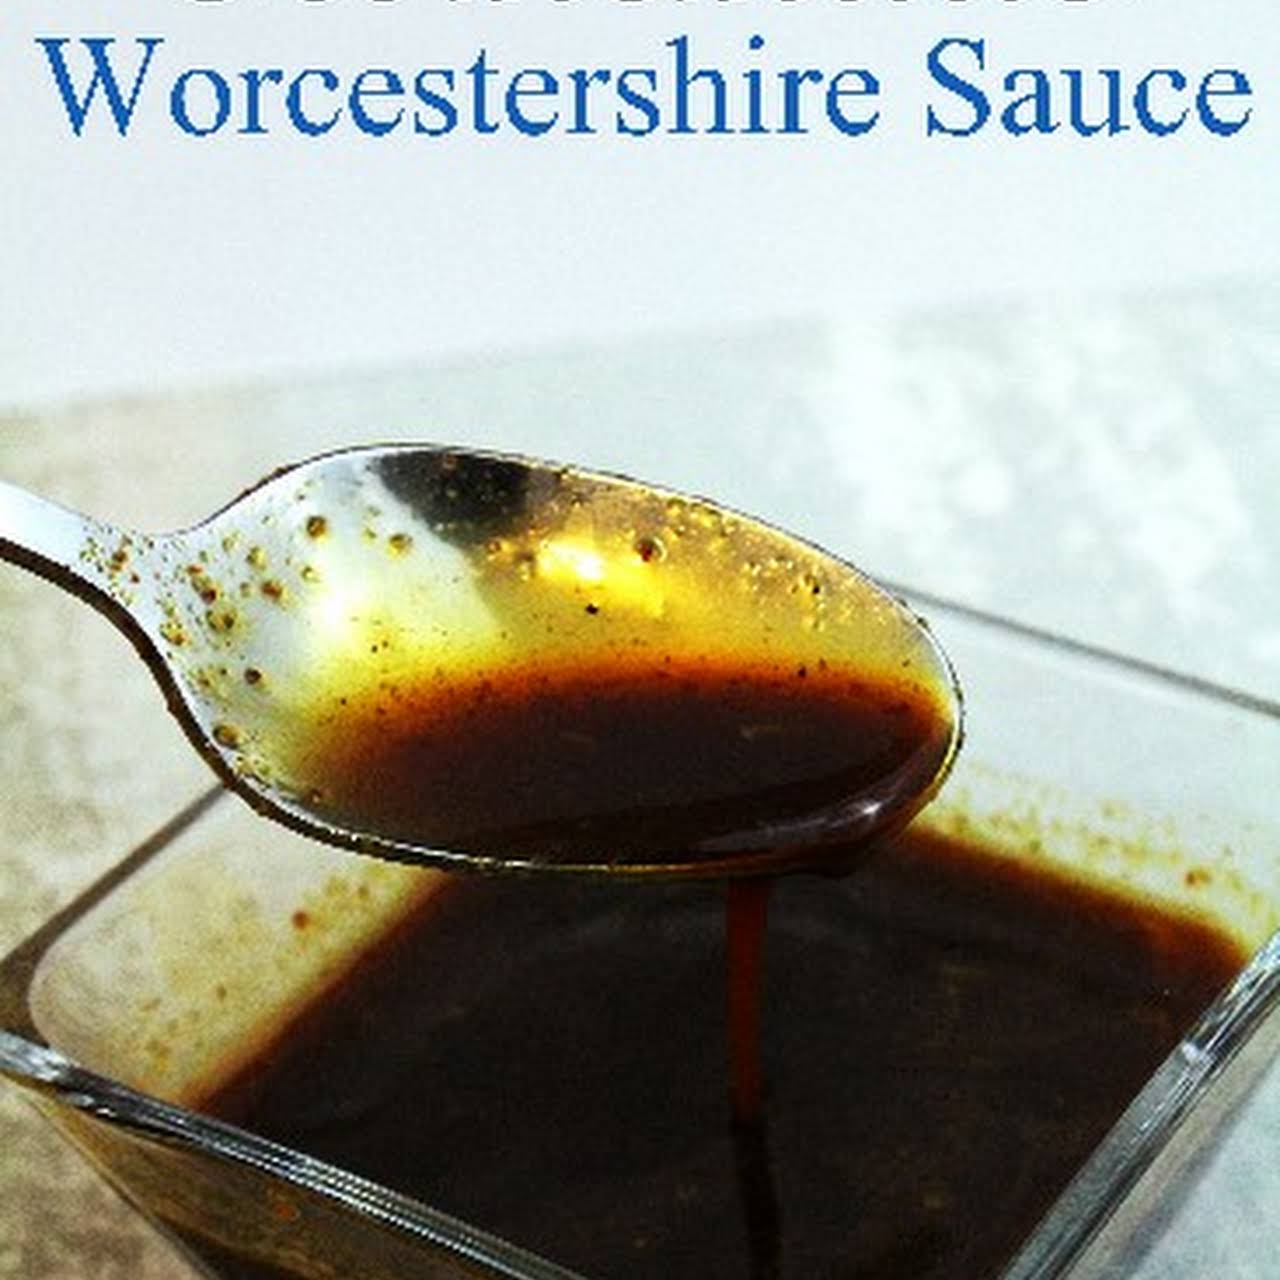 Homemade Worcestershire Sauce